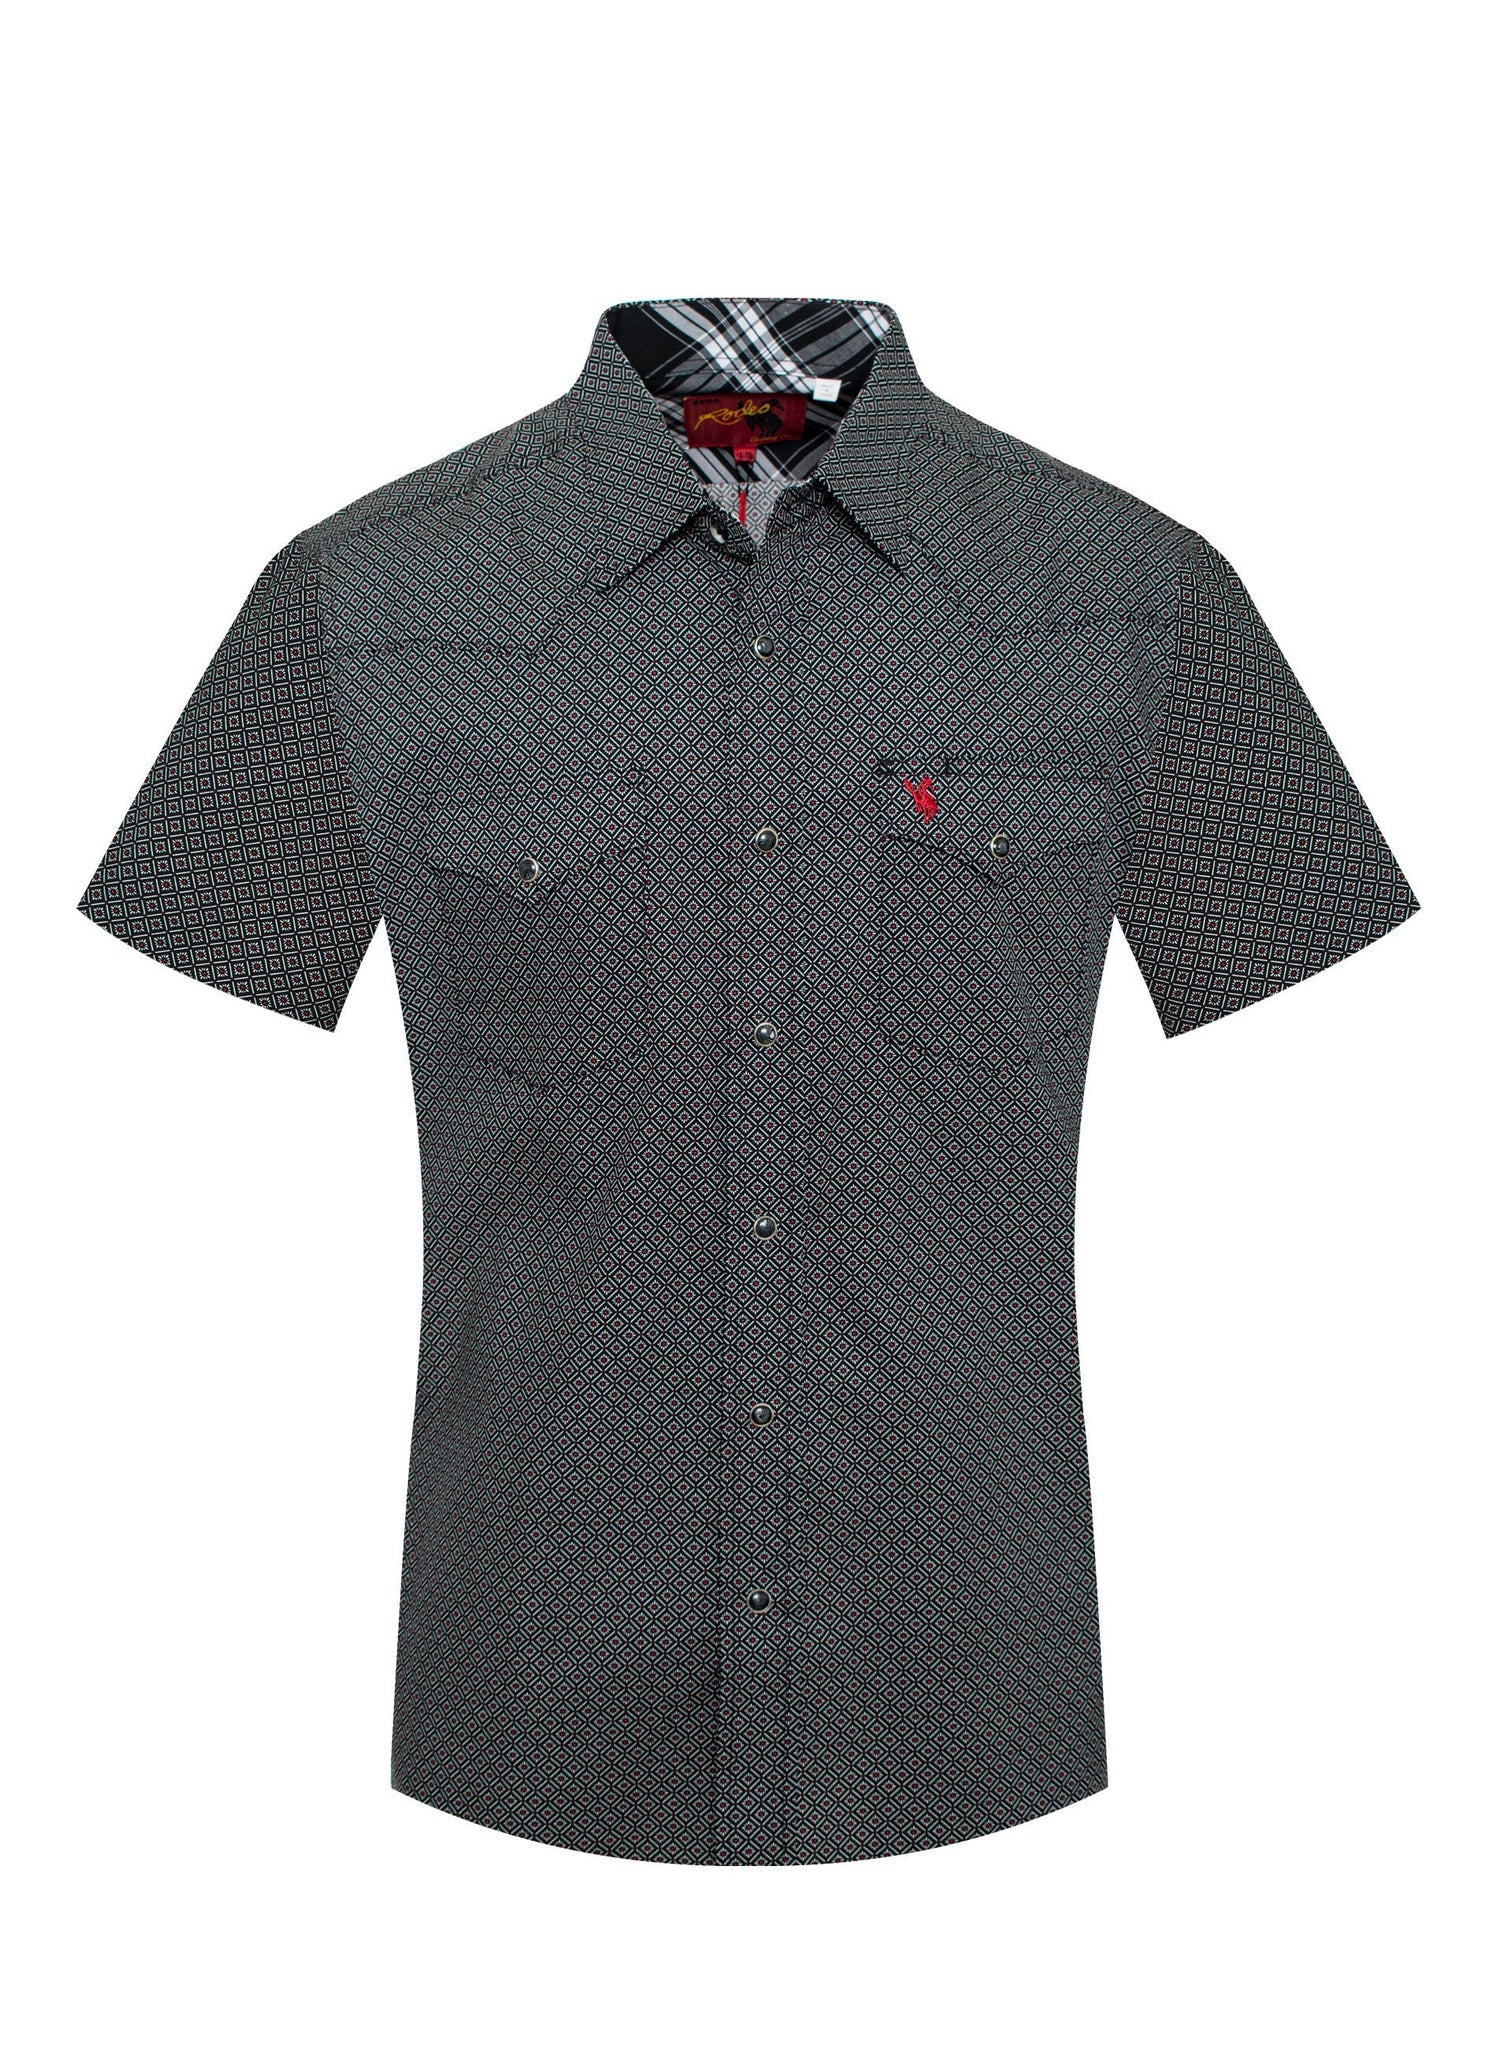 Men's Short Sleeve Pearl Snap Print Shirt -PS100S-147